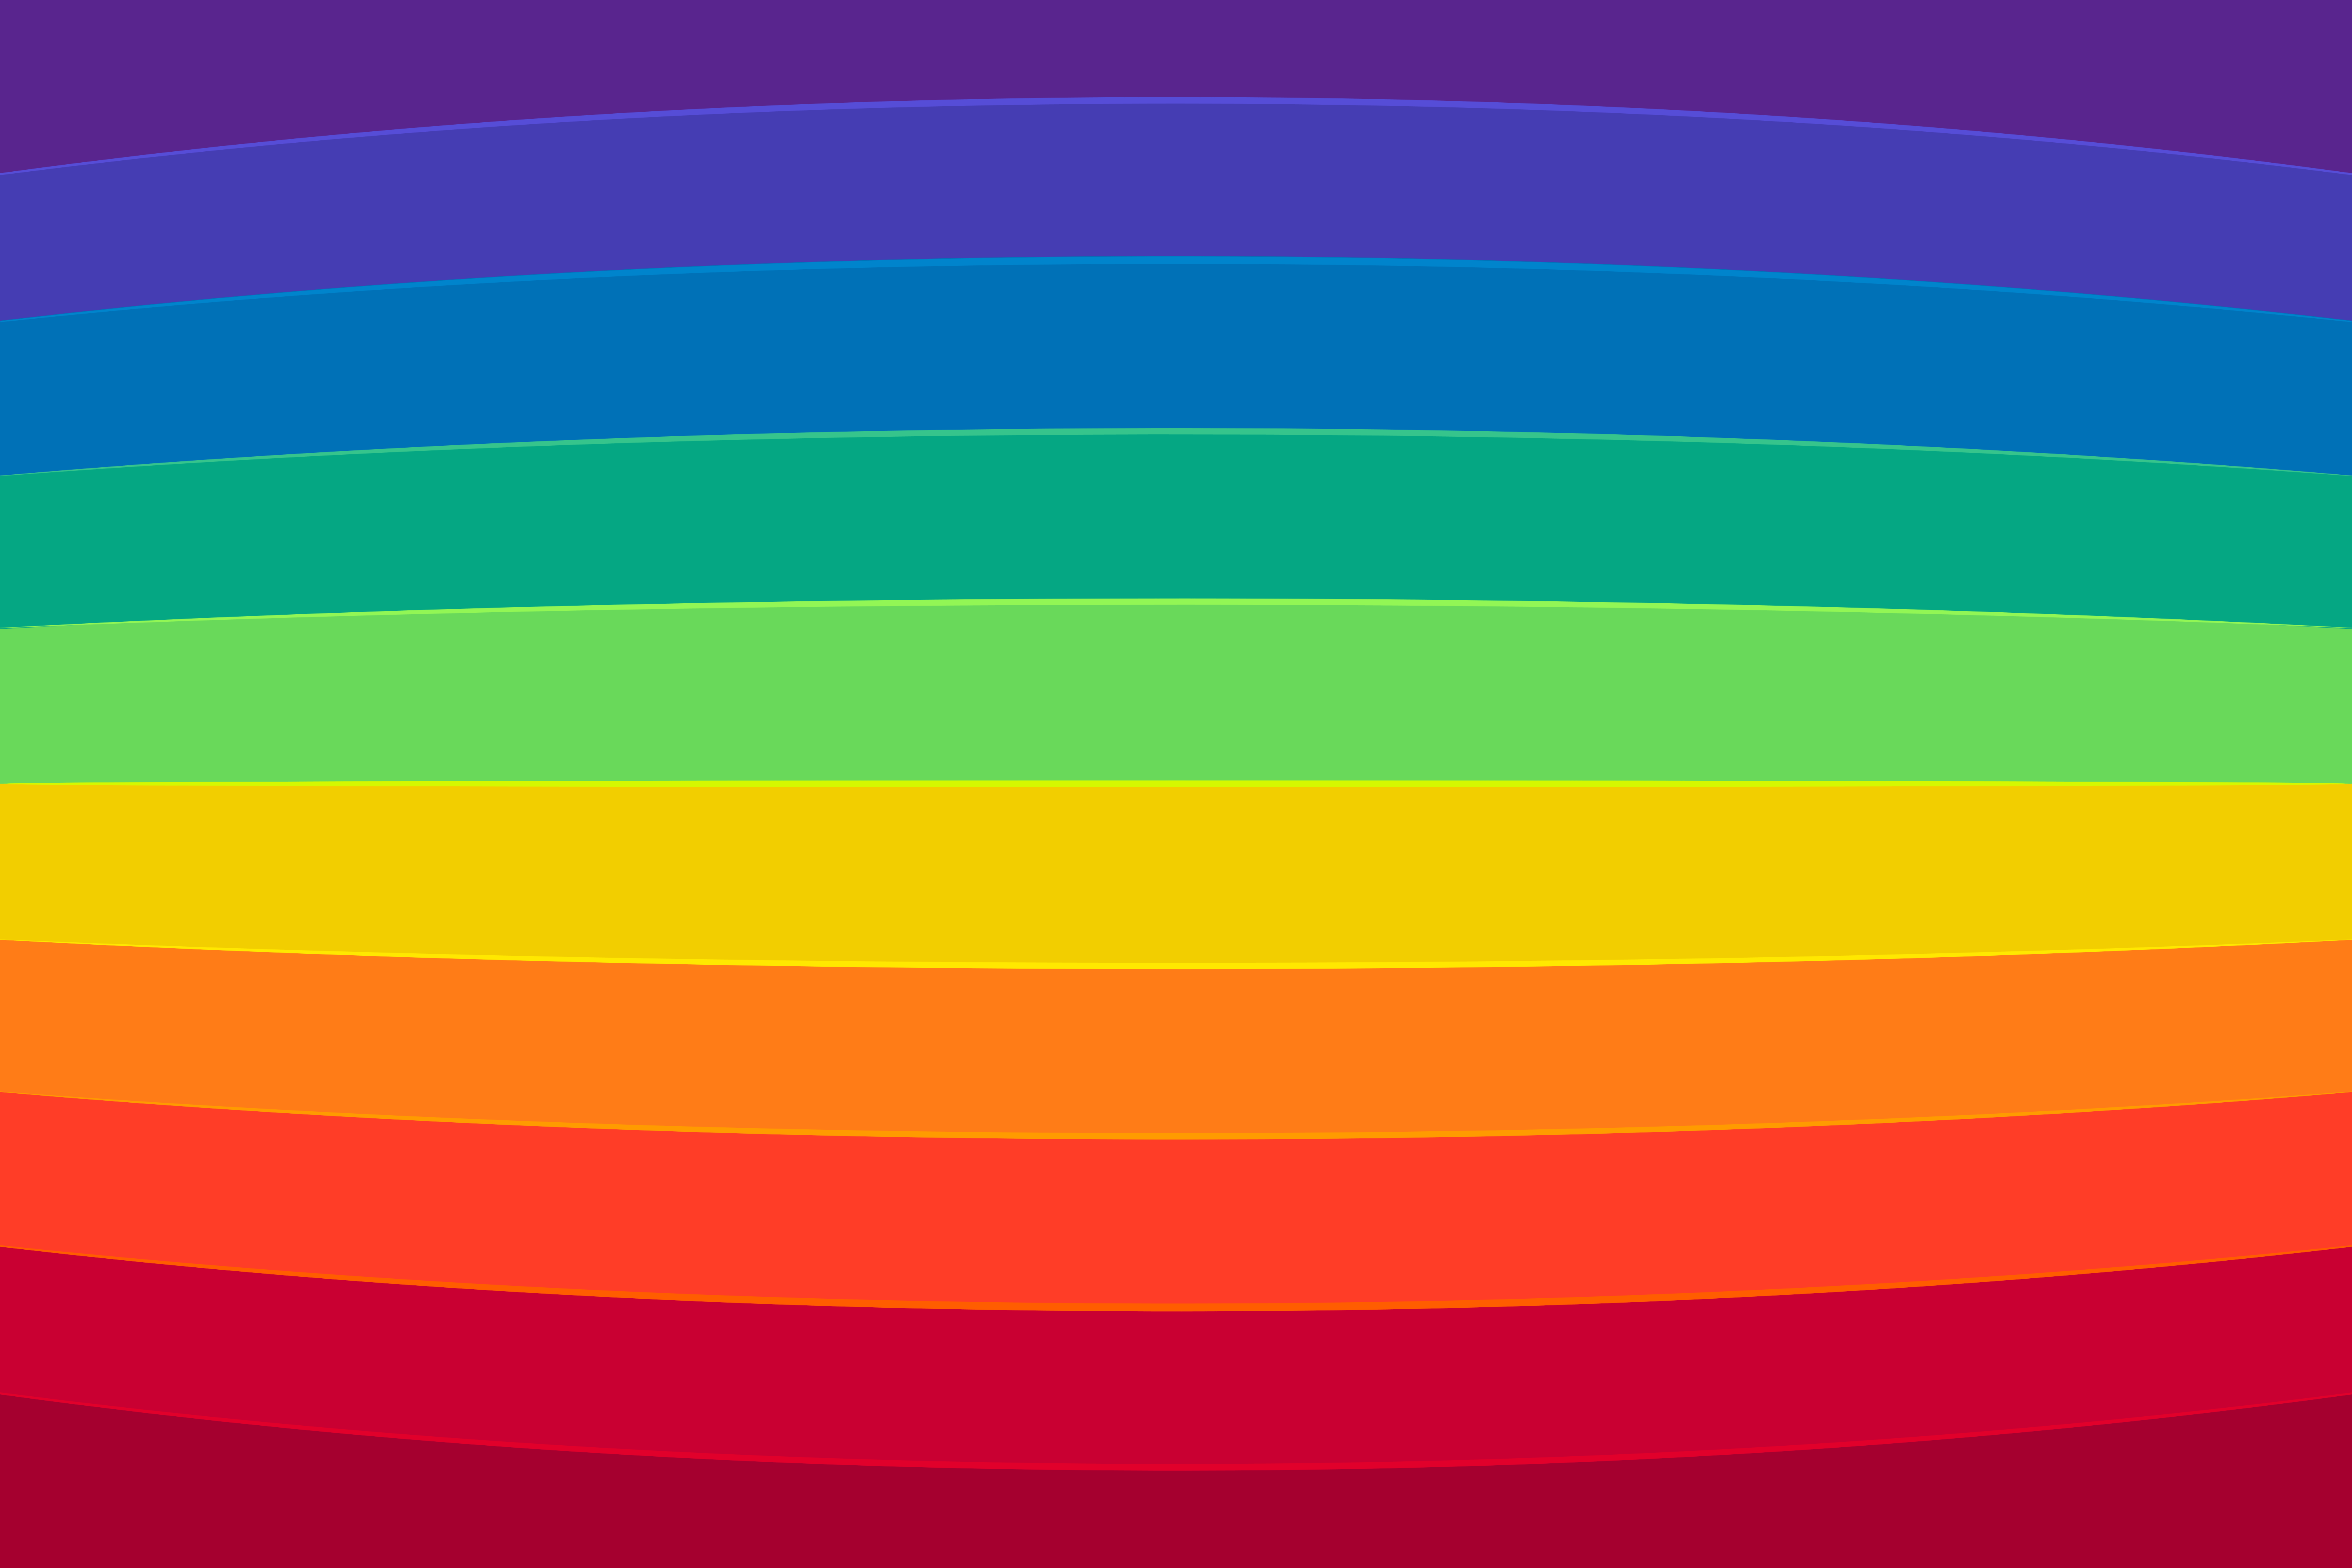 Rainbow Background 6K UHD 3:2 6000x4000 Wallpaper. UHD WALLPAPERS.EU